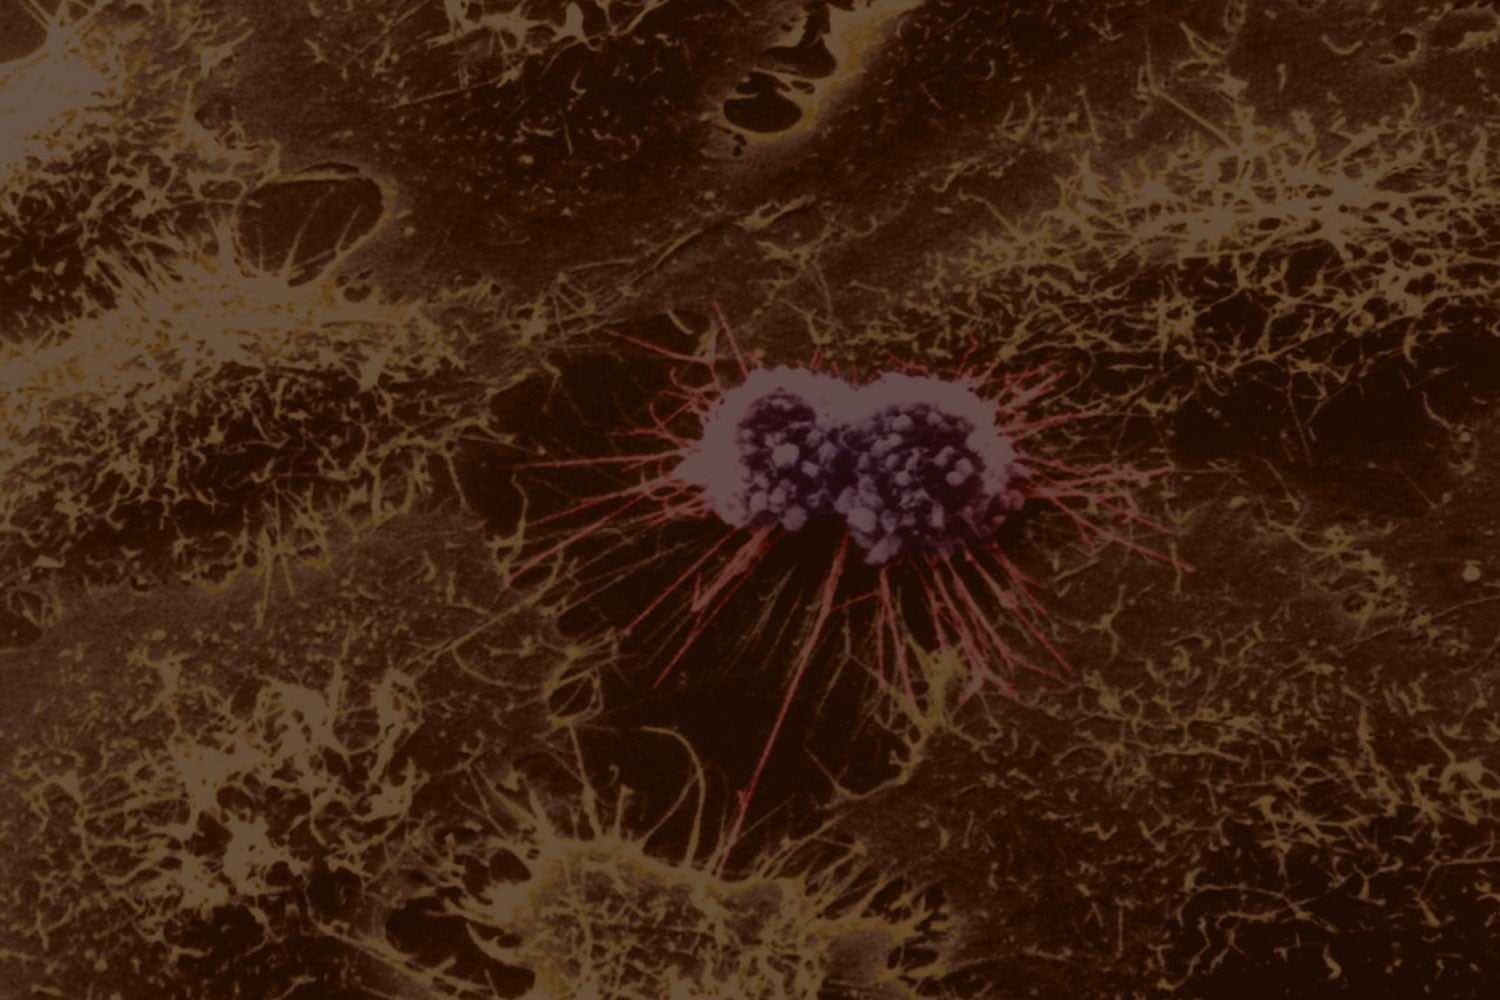 HeLa cells with Adenovirus, SEM